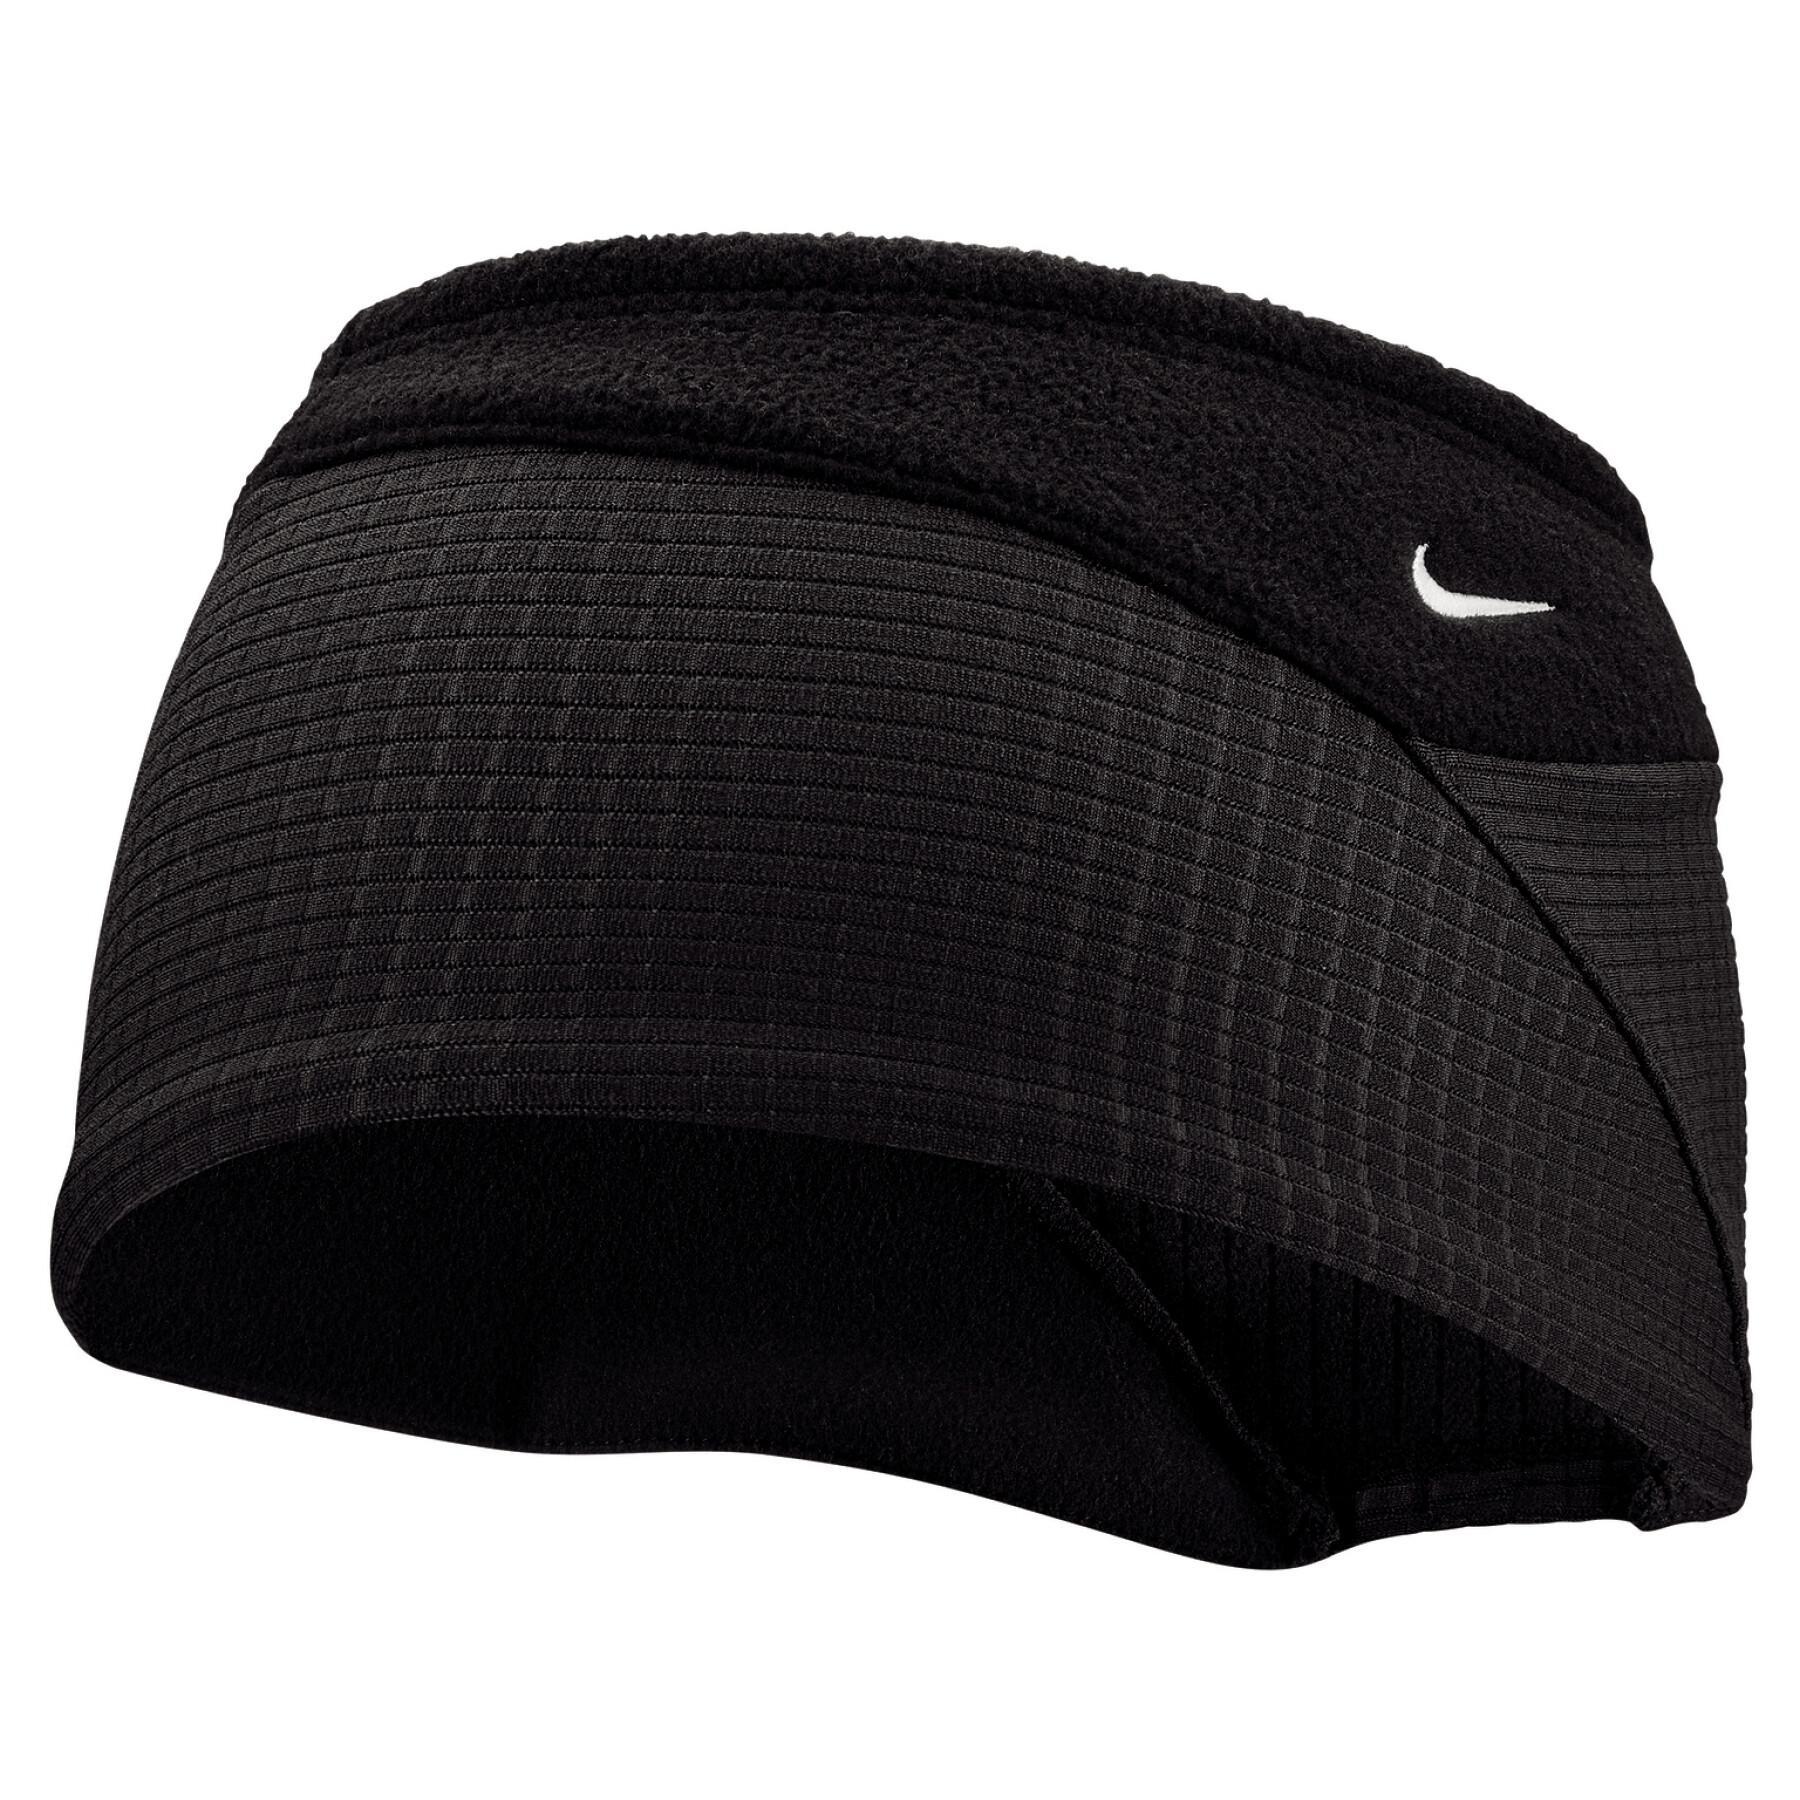 Bandeau Nike Strike elite - Nike - Marques - Textile